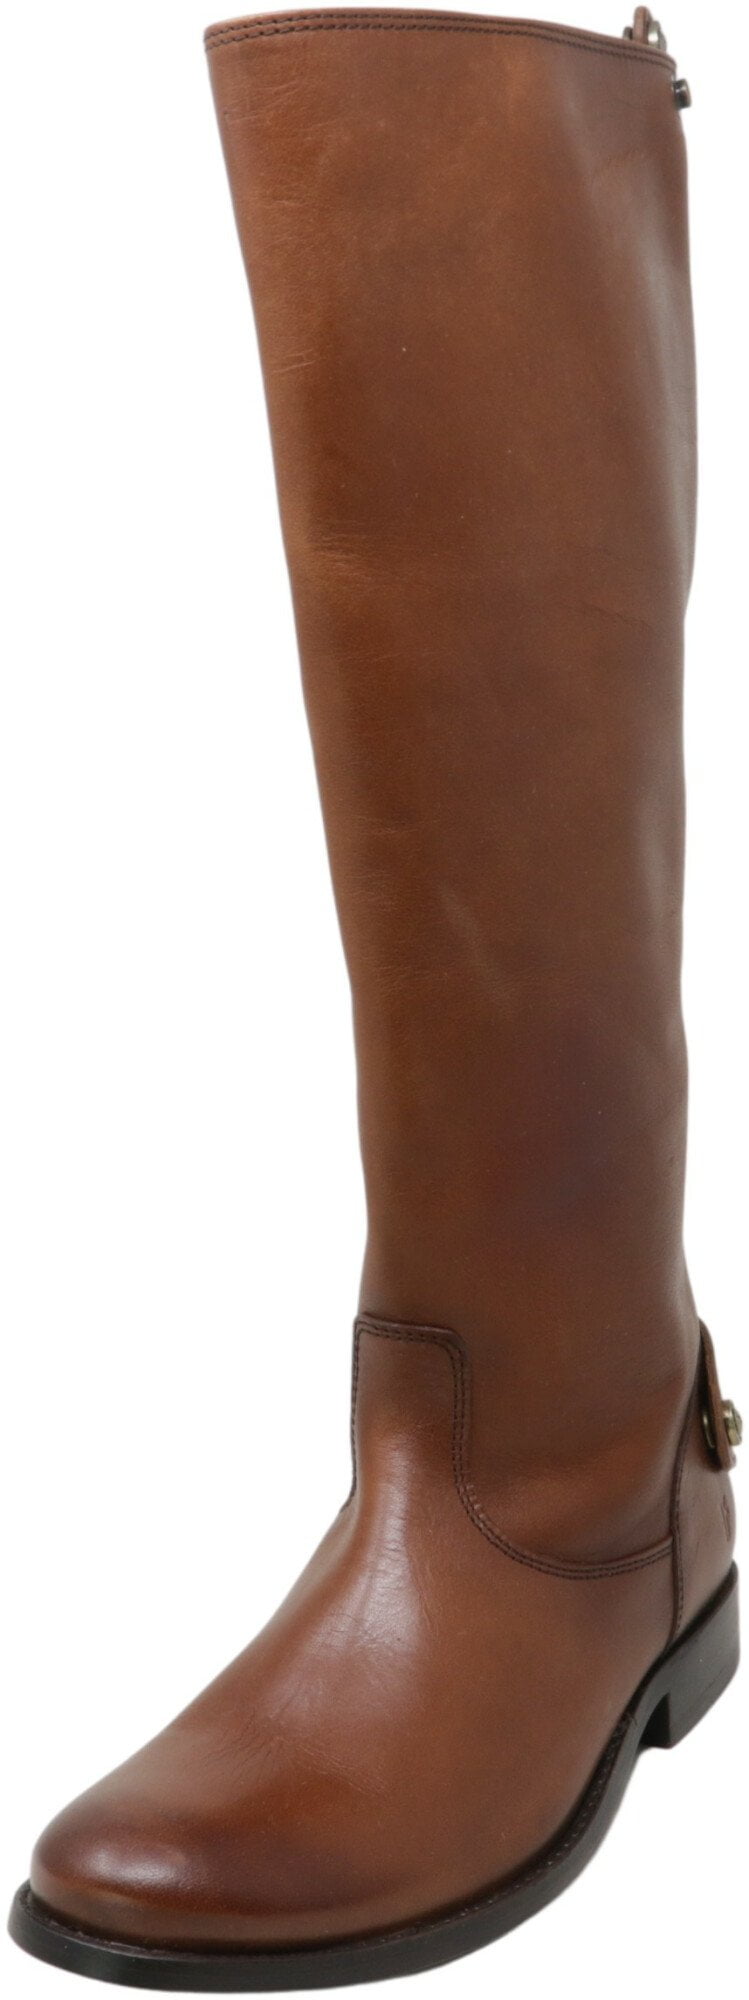 Frye Women's Melissa Button Back Zip Cognac Knee-High Leather Boot - 6 ...